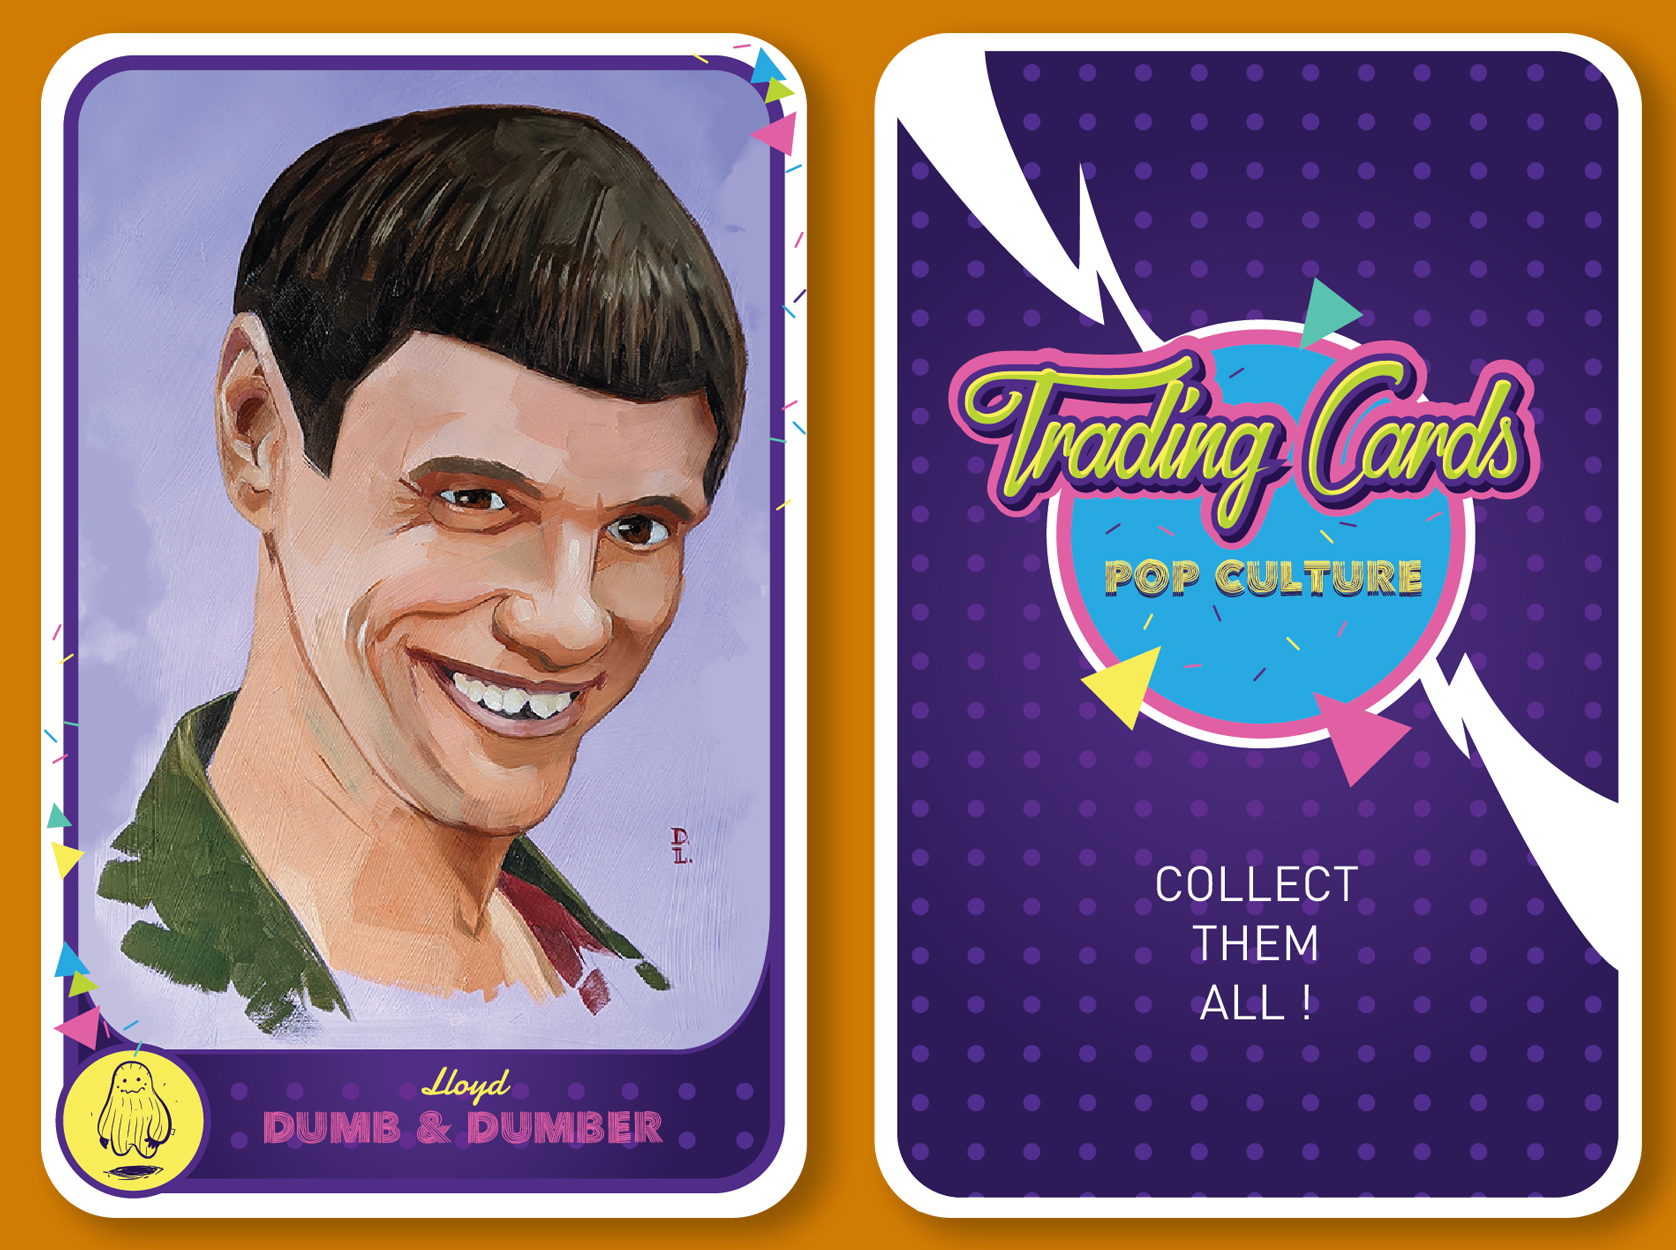 Jim Carrey Pop culture card